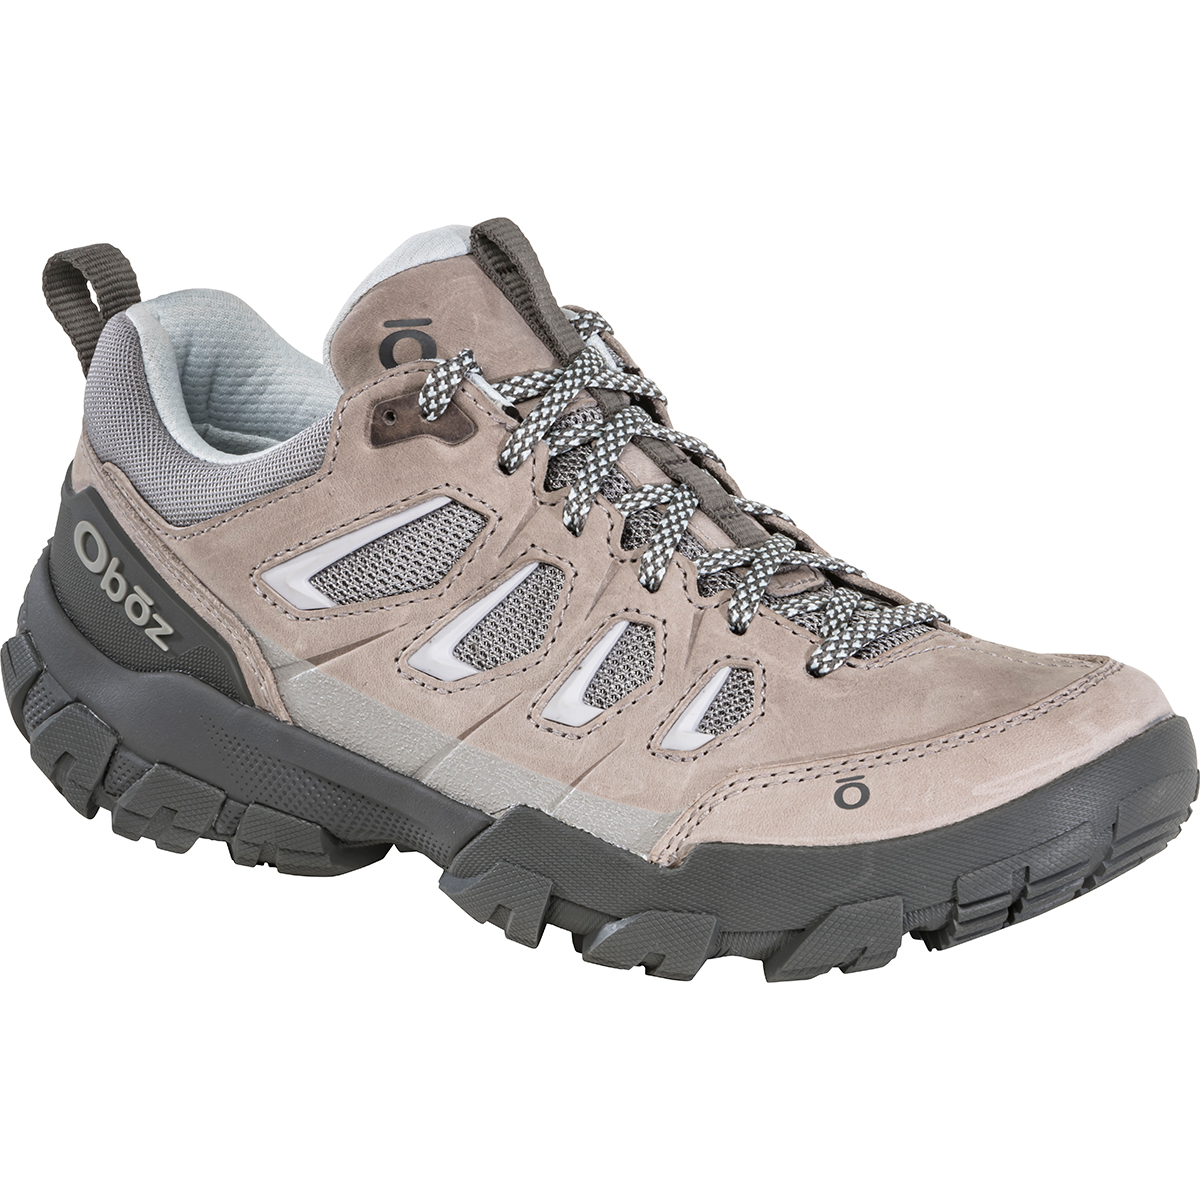 Oboz Women's Sawtooth X Low Hiking Shoes, Wide